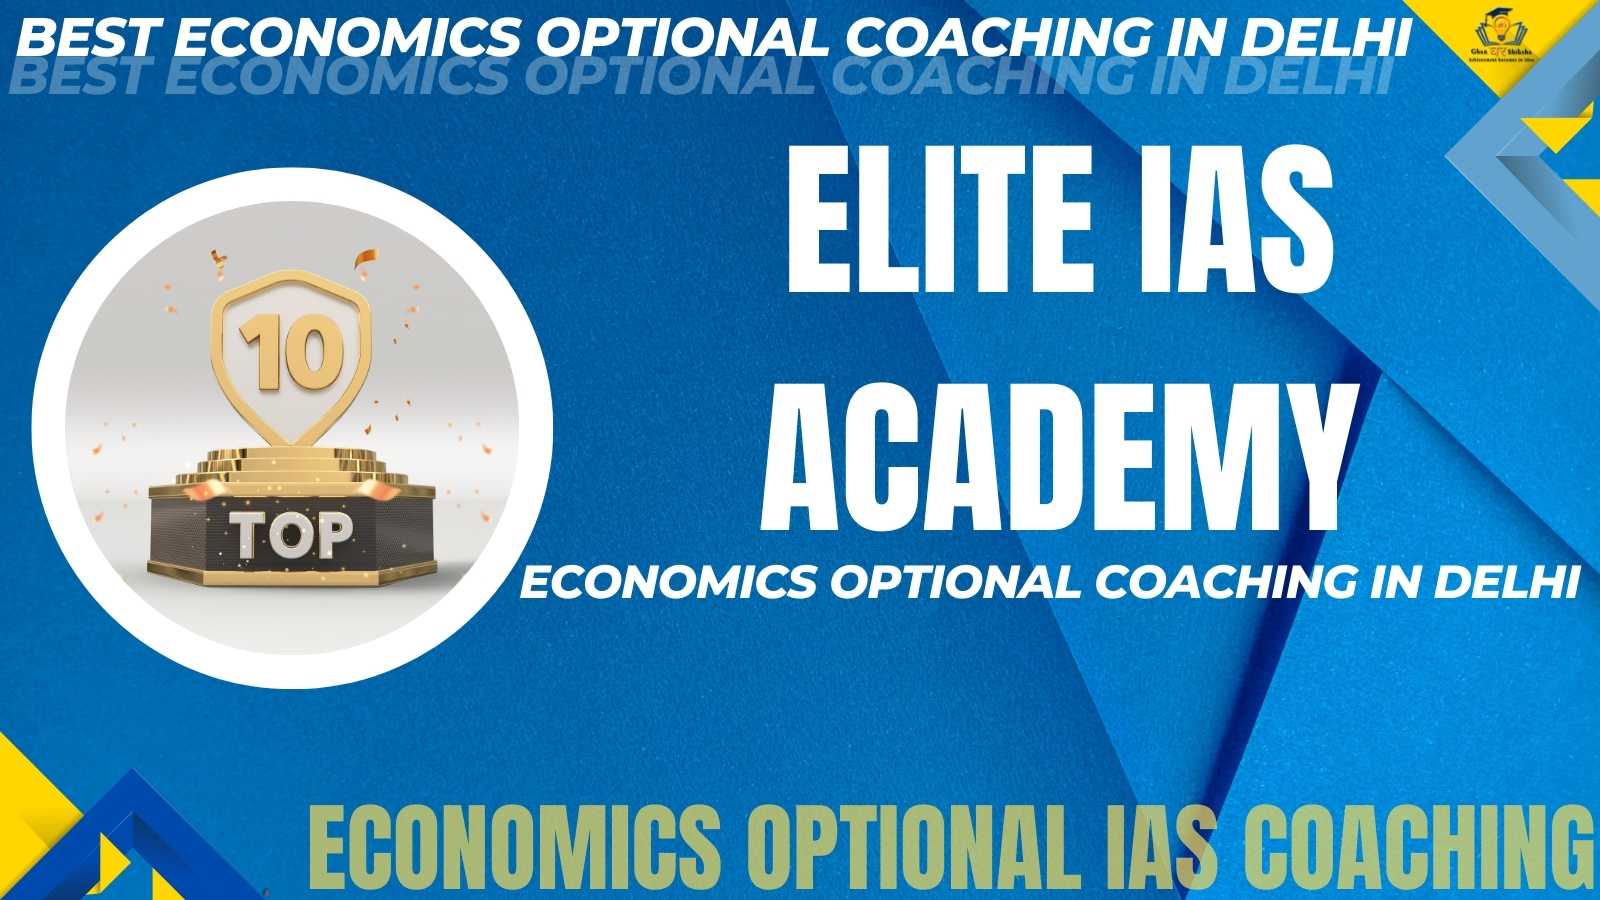 Best Economics Optional Coaching of Delhi